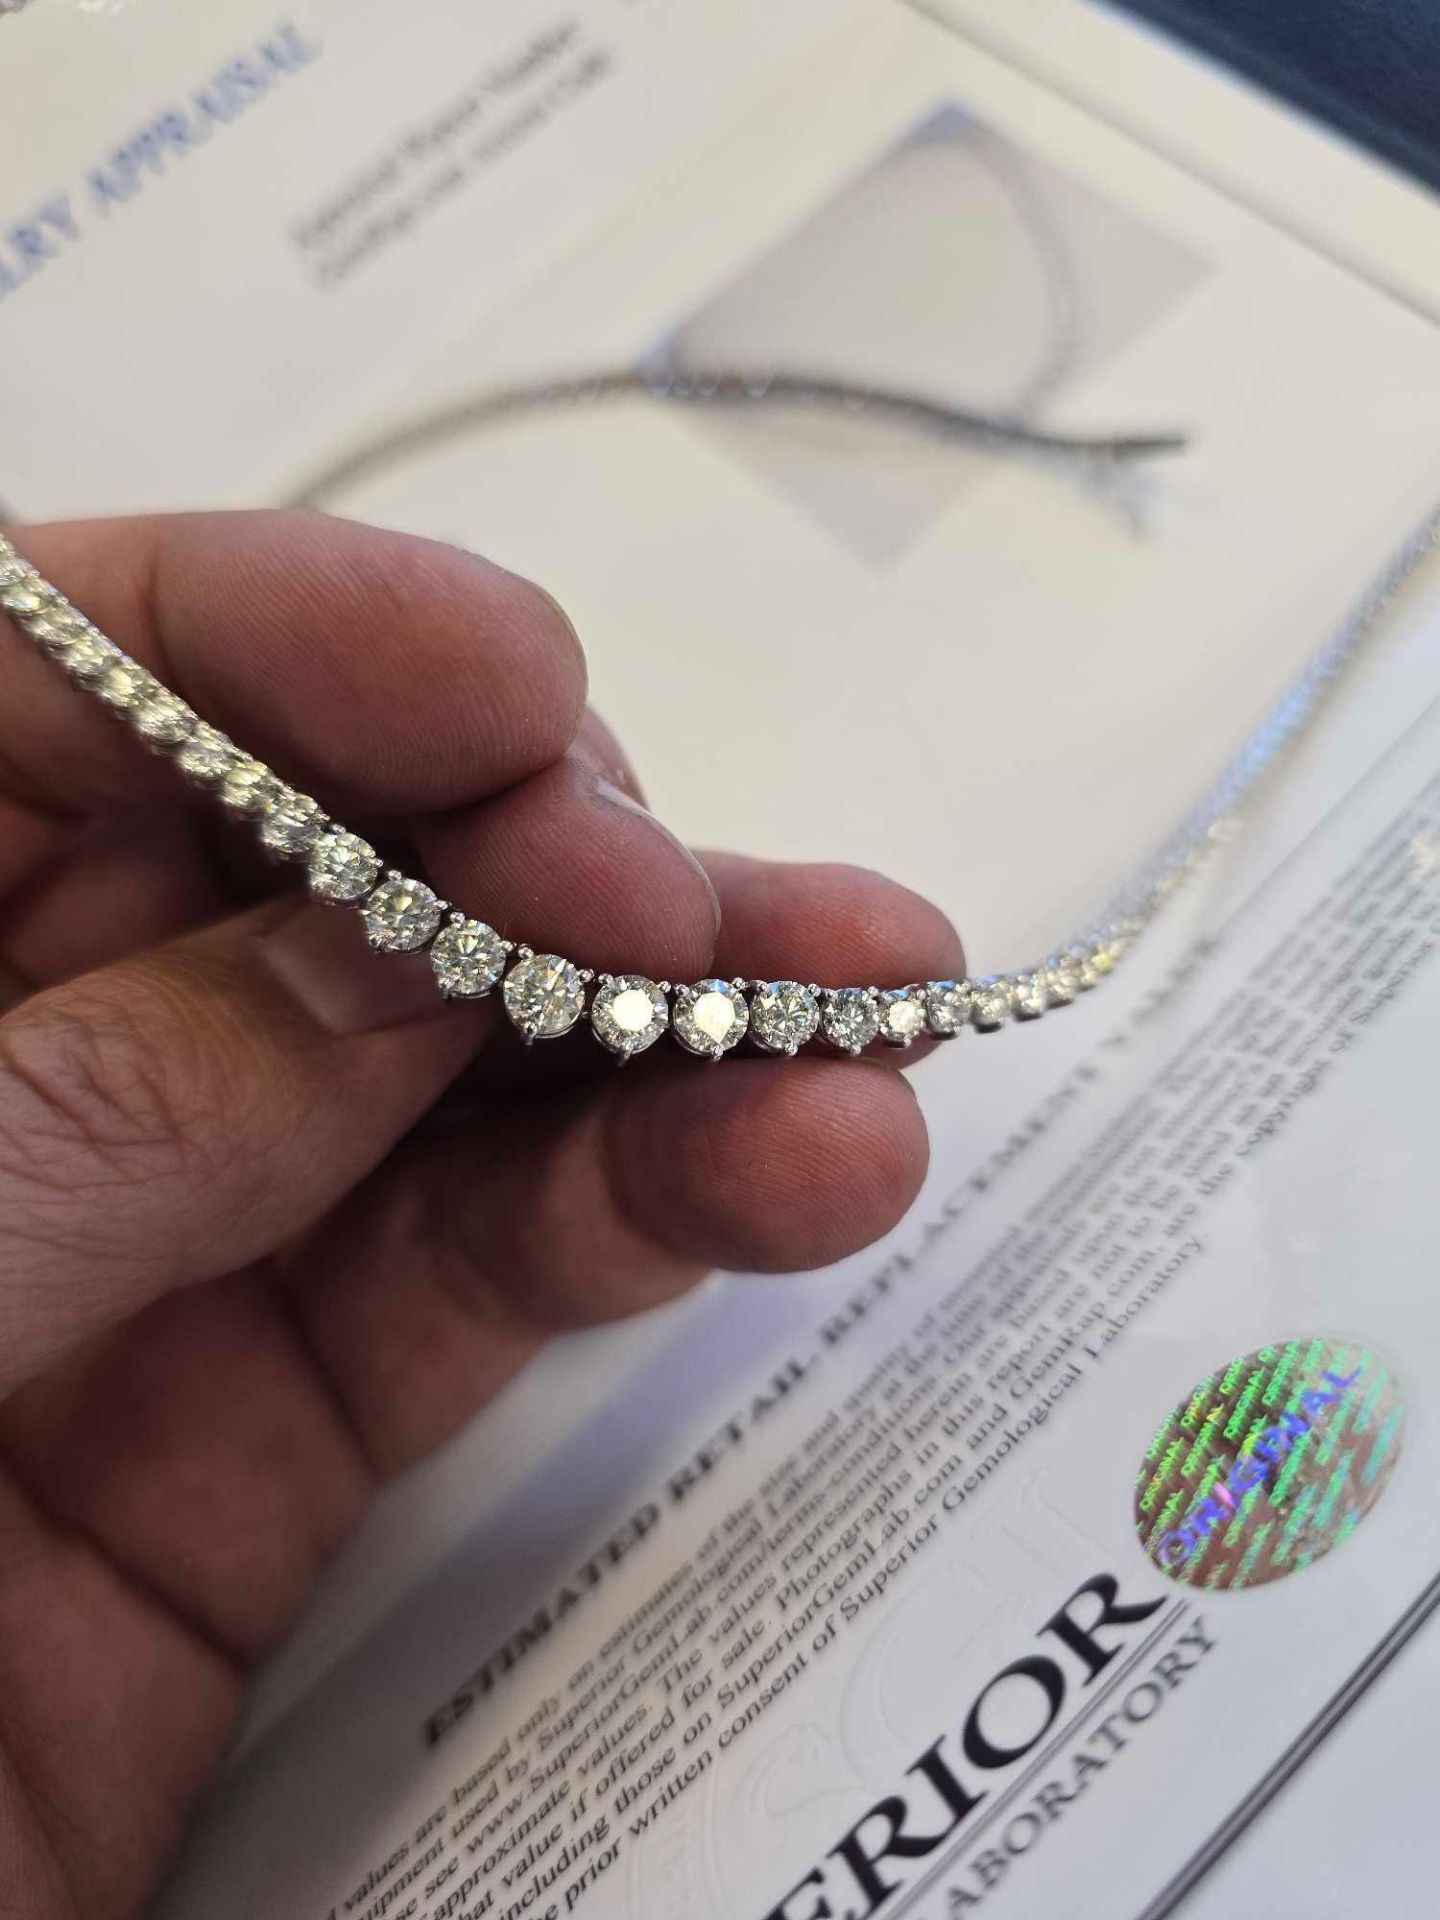 18kt White Gold diamond necklace 10.82 carats of diamonds - Image 2 of 14